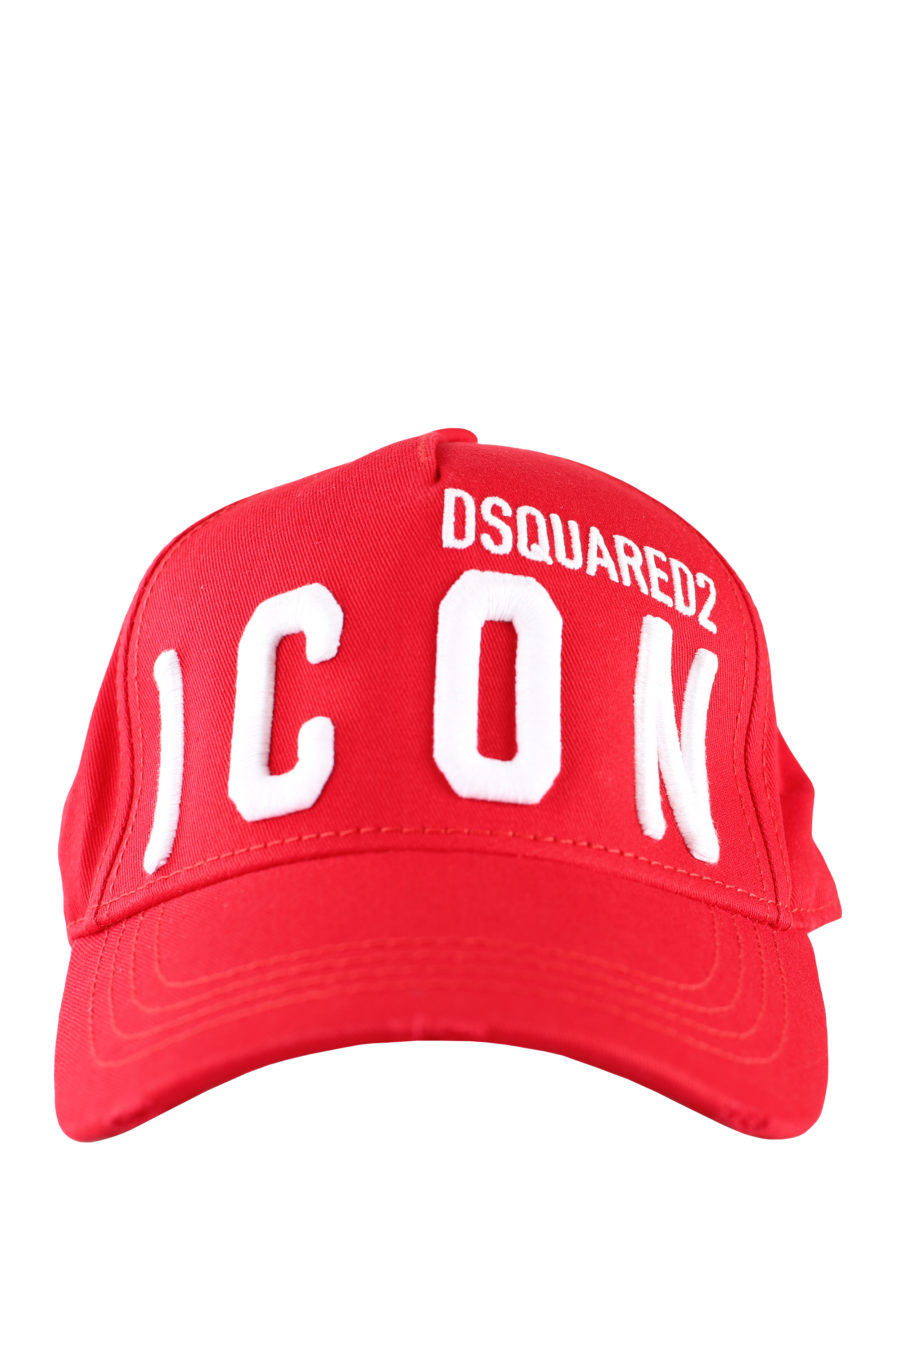 Gorra roja ajustable con logo "icon" blanco - IMG 0054